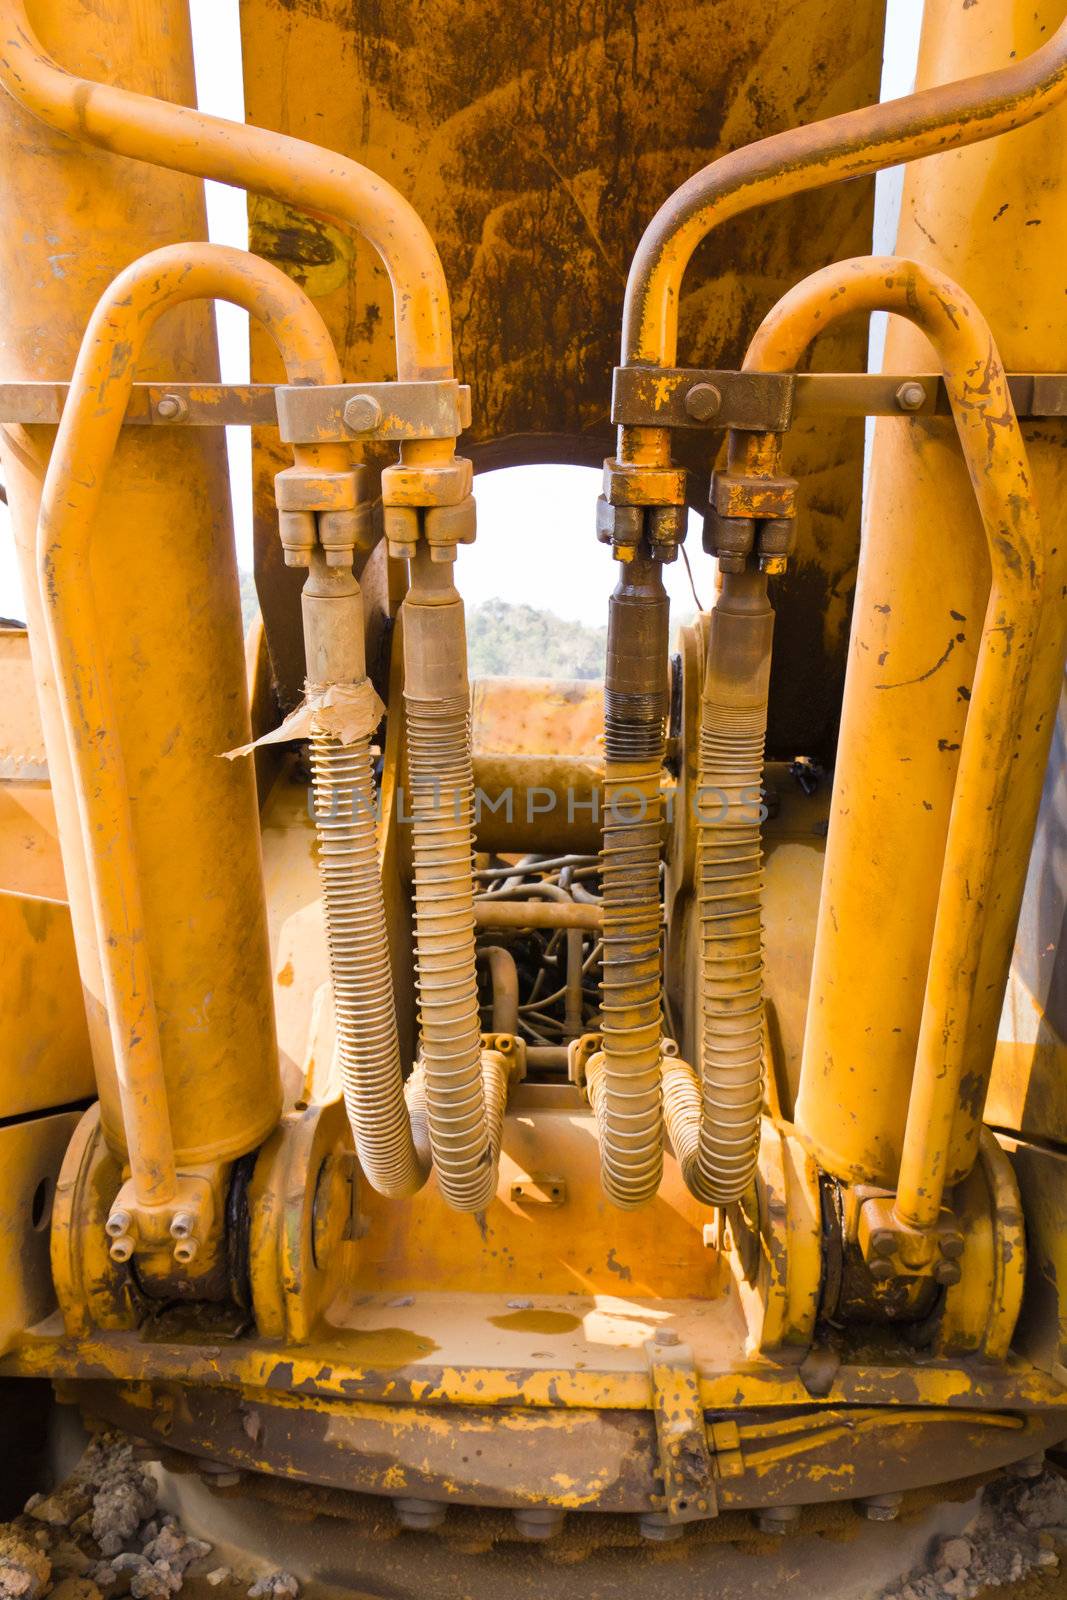 Machinery bulldozer1 by stoonn